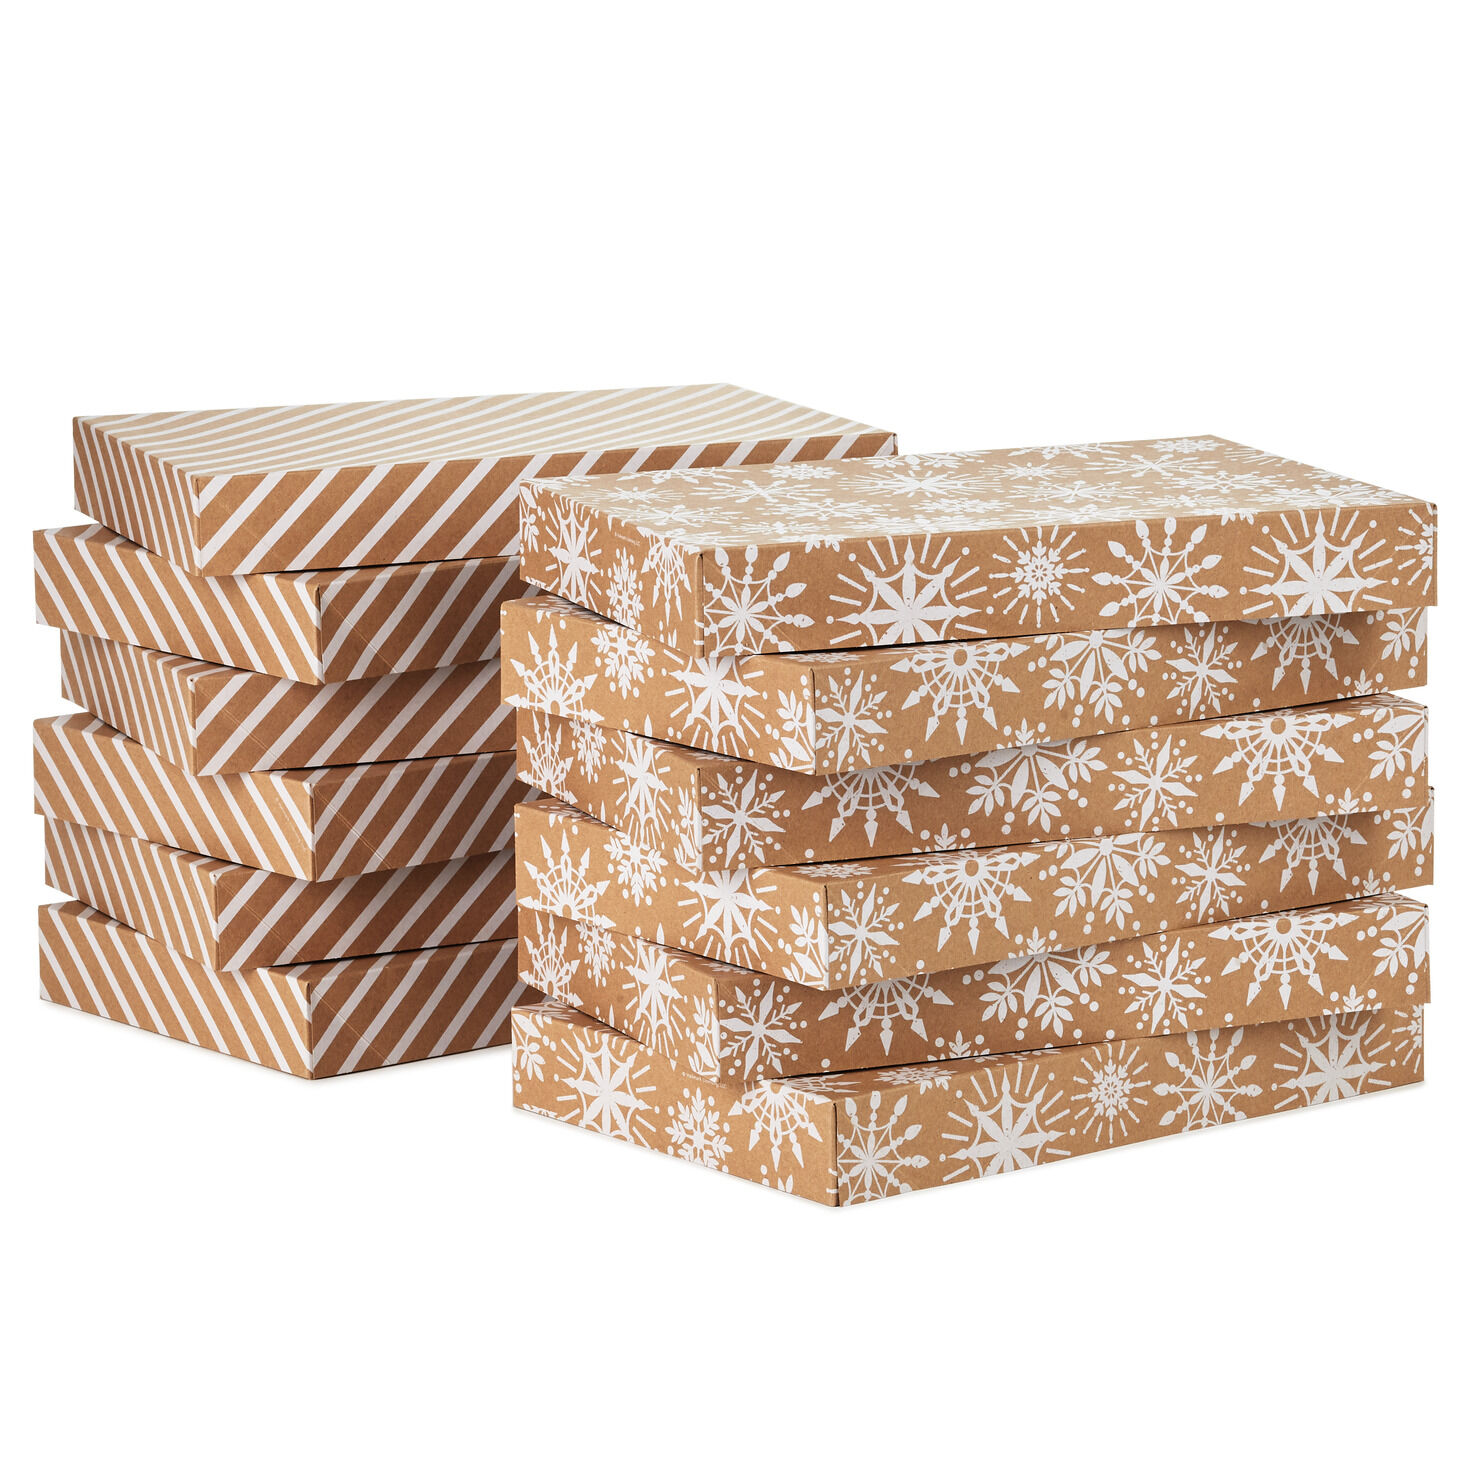 6" x 3 1/2" x 5 1/2" 12 Pack Cardboard Religious Snowflake Treat Boxes 